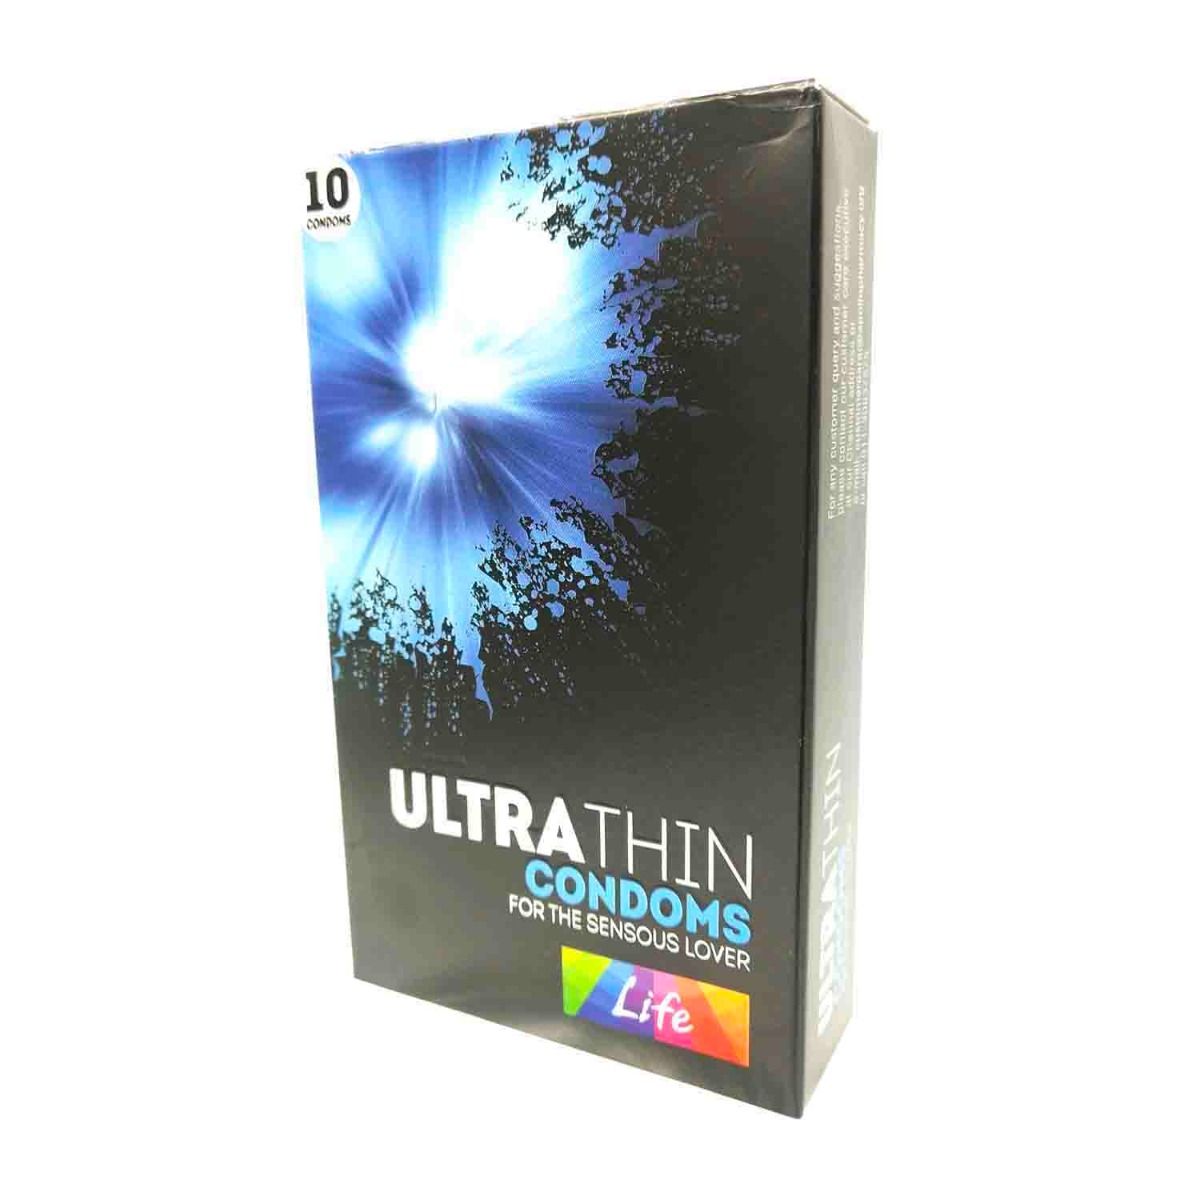 Buy Apollo Life Ultrathin Condoms, 10 Count Online